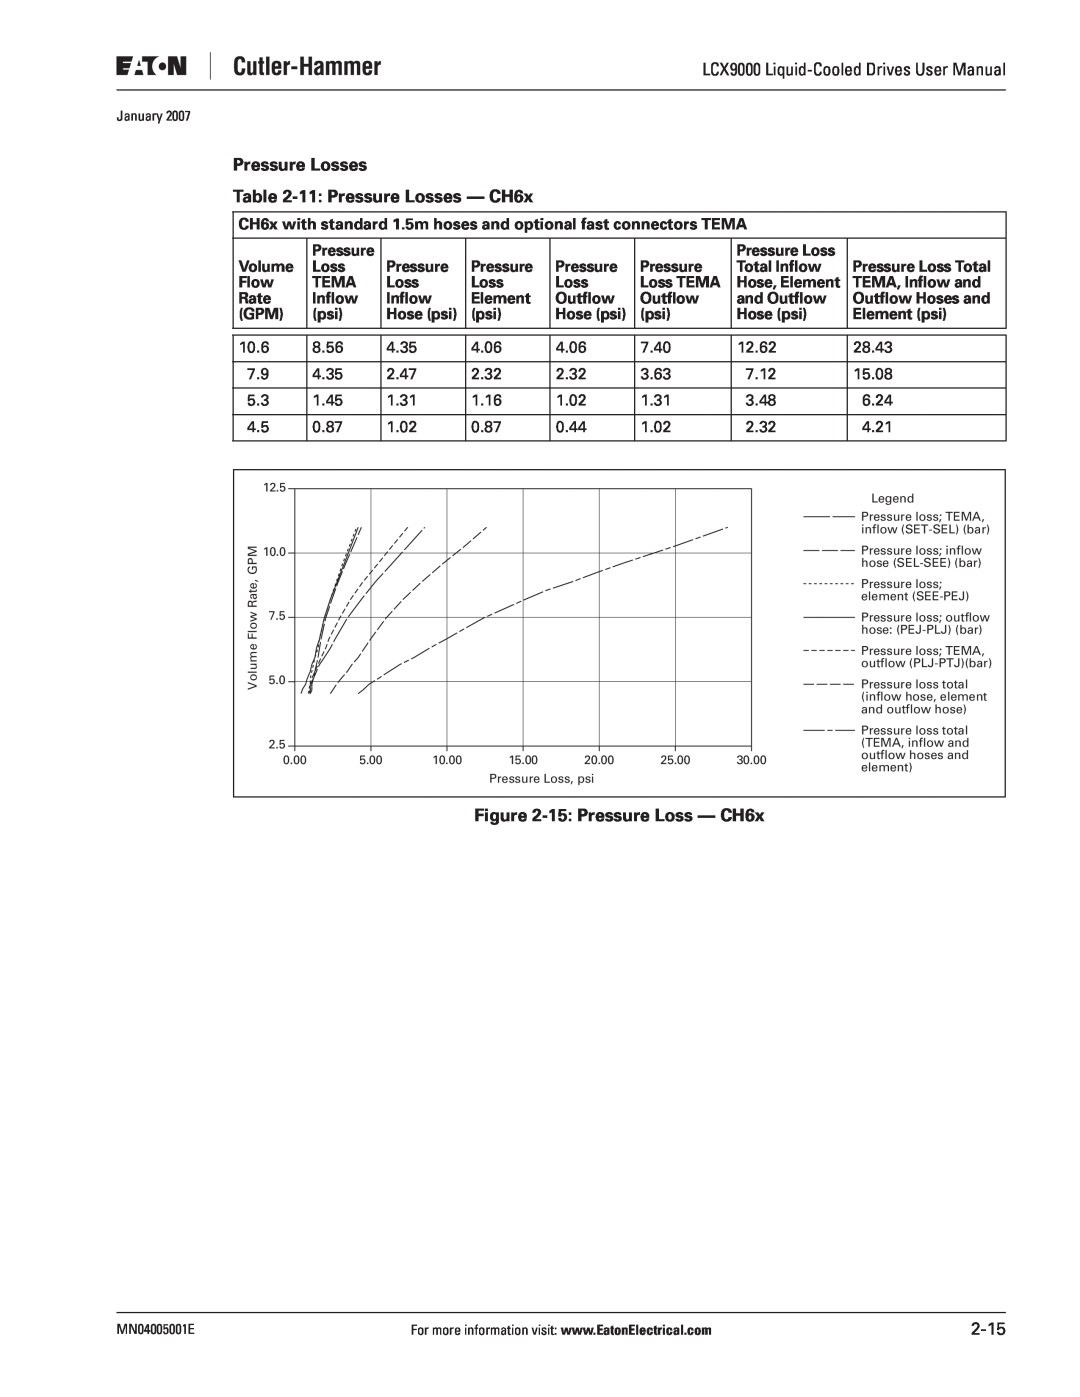 J. T. Eaton LCX9000 user manual Pressure Losses -11 Pressure Losses - CH6x, 15 Pressure Loss - CH6x, Outﬂow Hoses and 